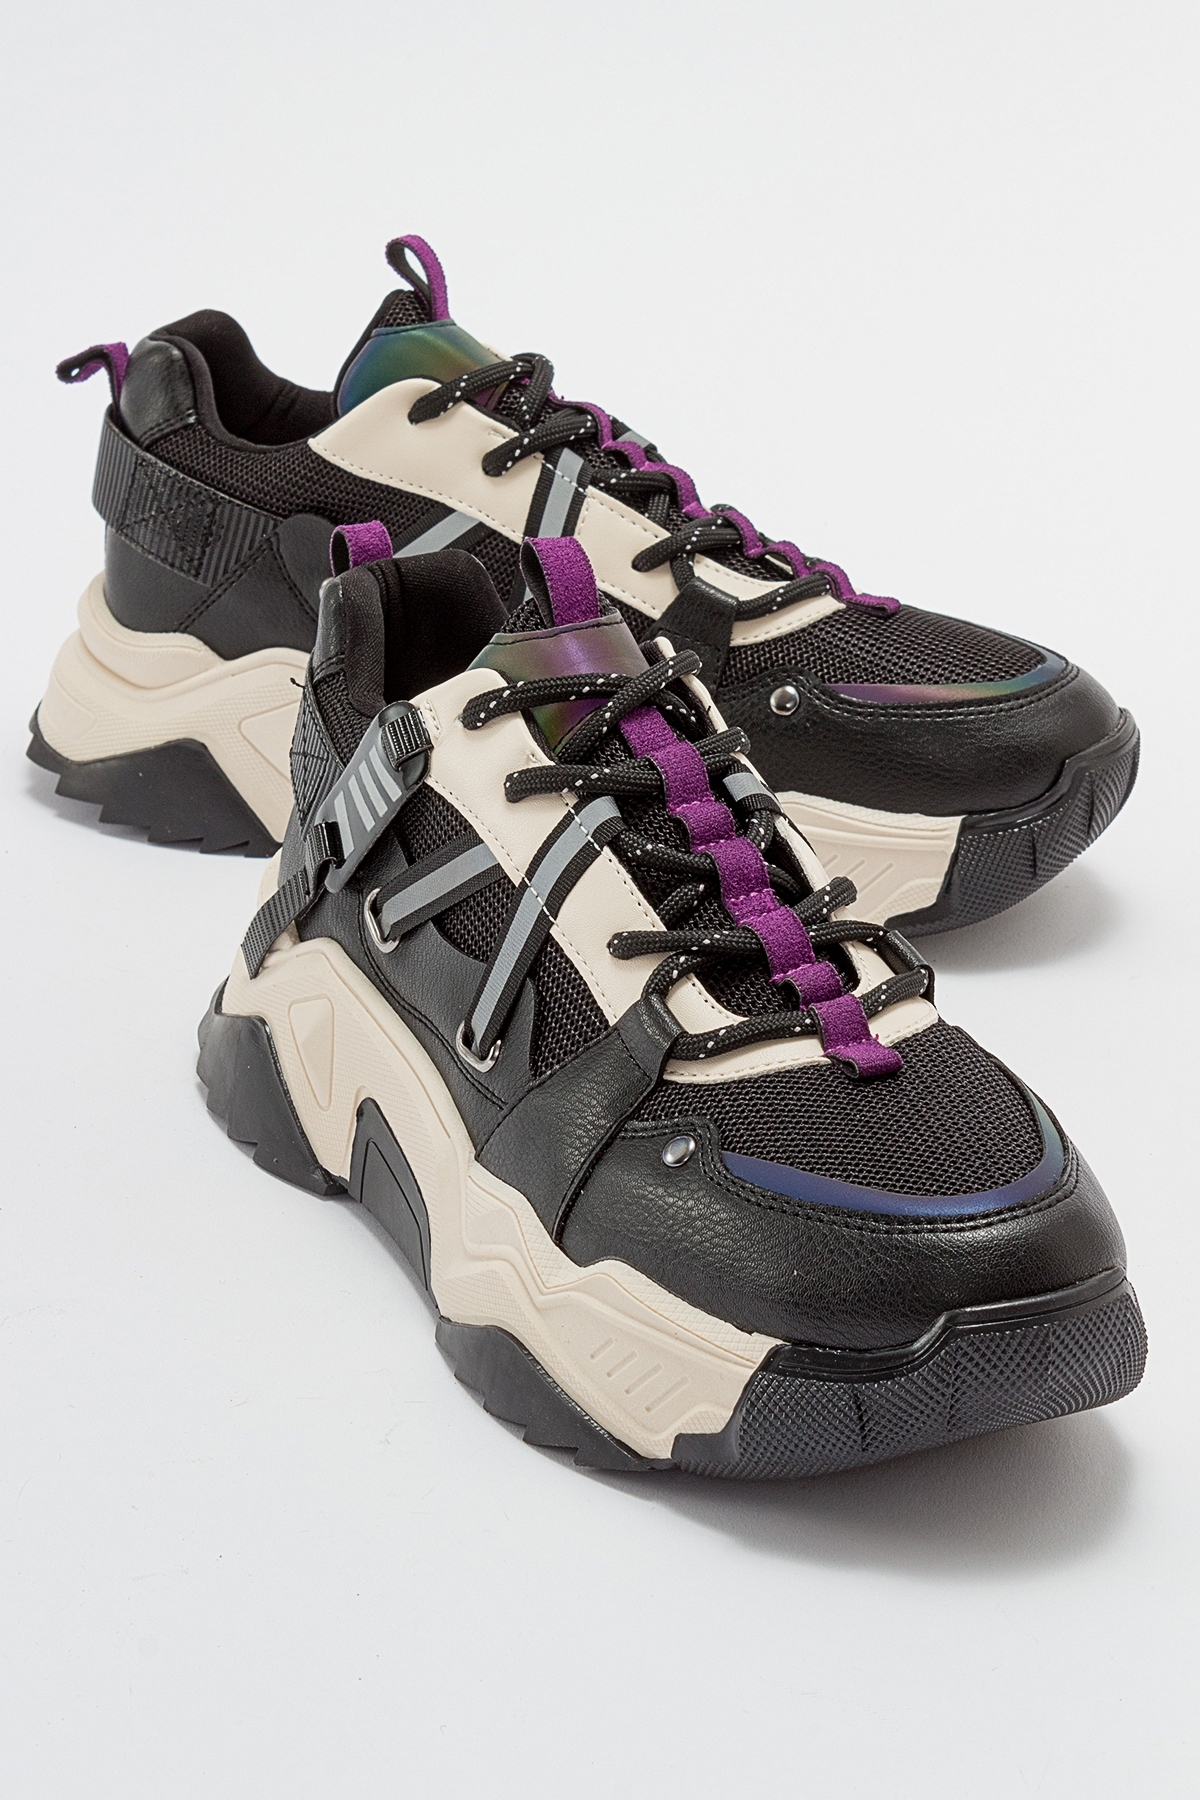 LuviShoes LEONA Black Purple Women's Sports Sneakers